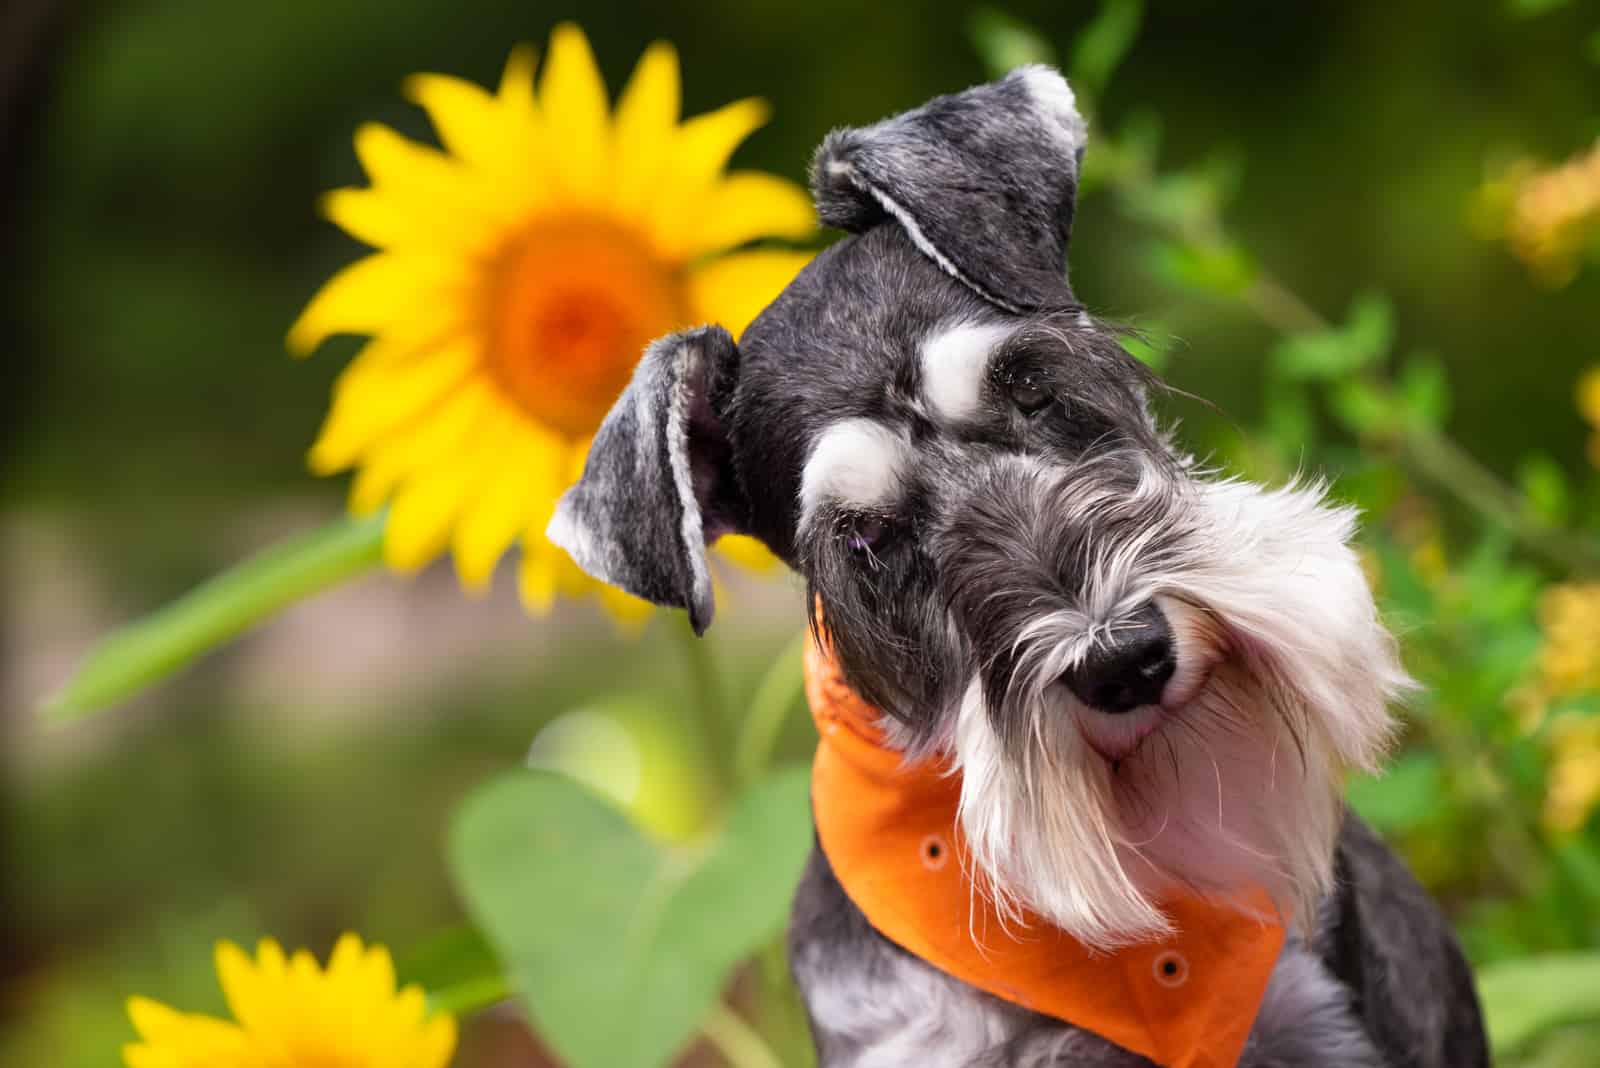 Miniature schnauzer dog posed with bright yellow and orange sunflowers